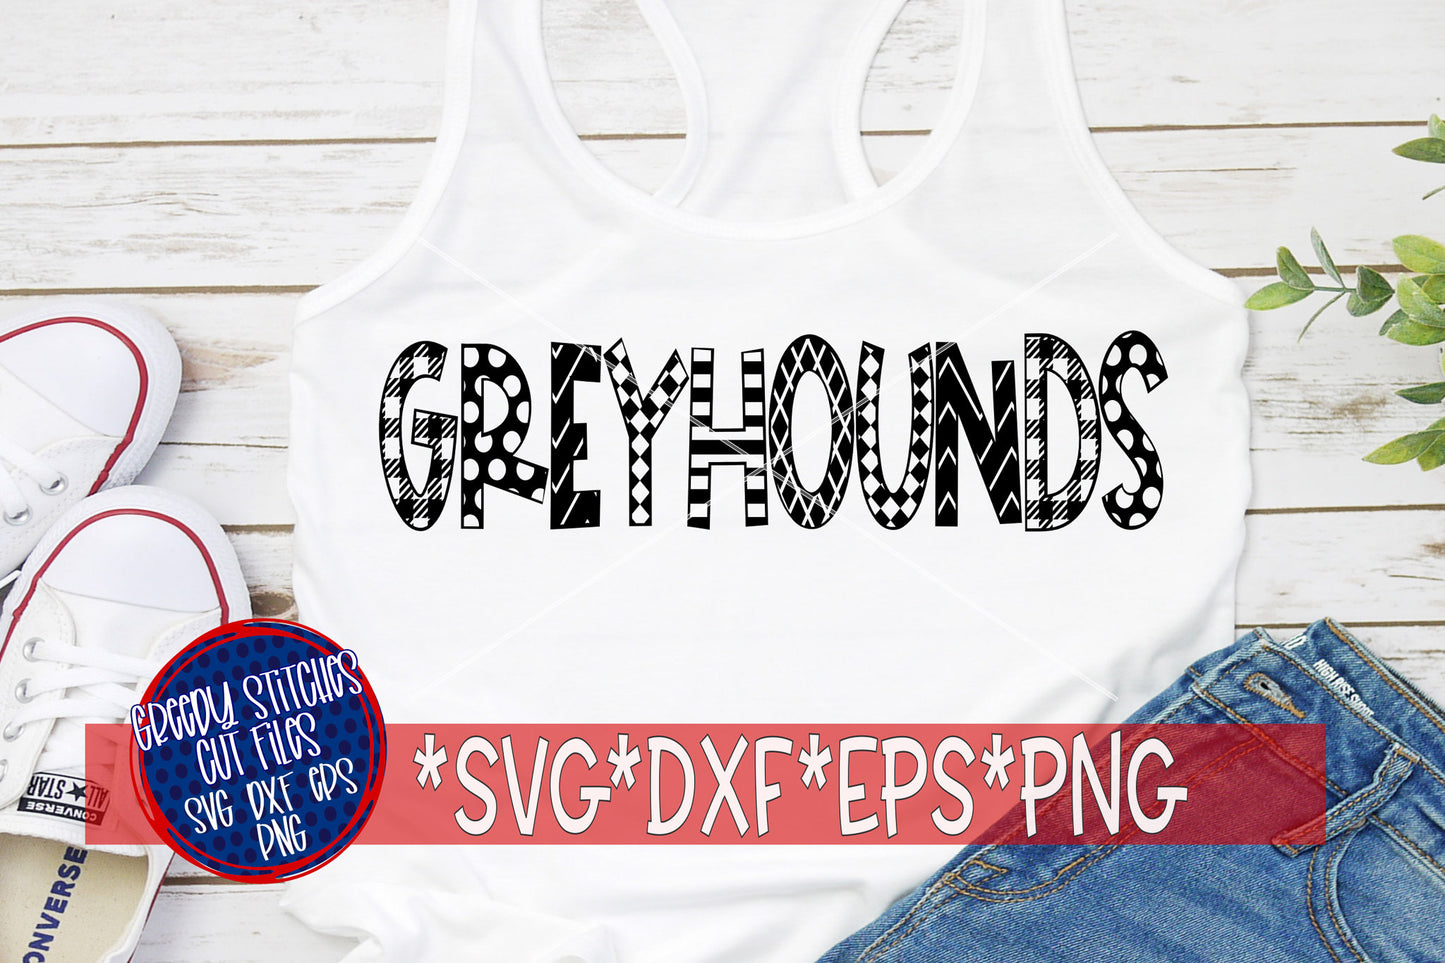 Greyhounds SvG | Greyhounds svg dxf eps png. Greyhounds word art SvG | Greyhounds DxF | Greyhounds word art EpS | Instant Download Cut File